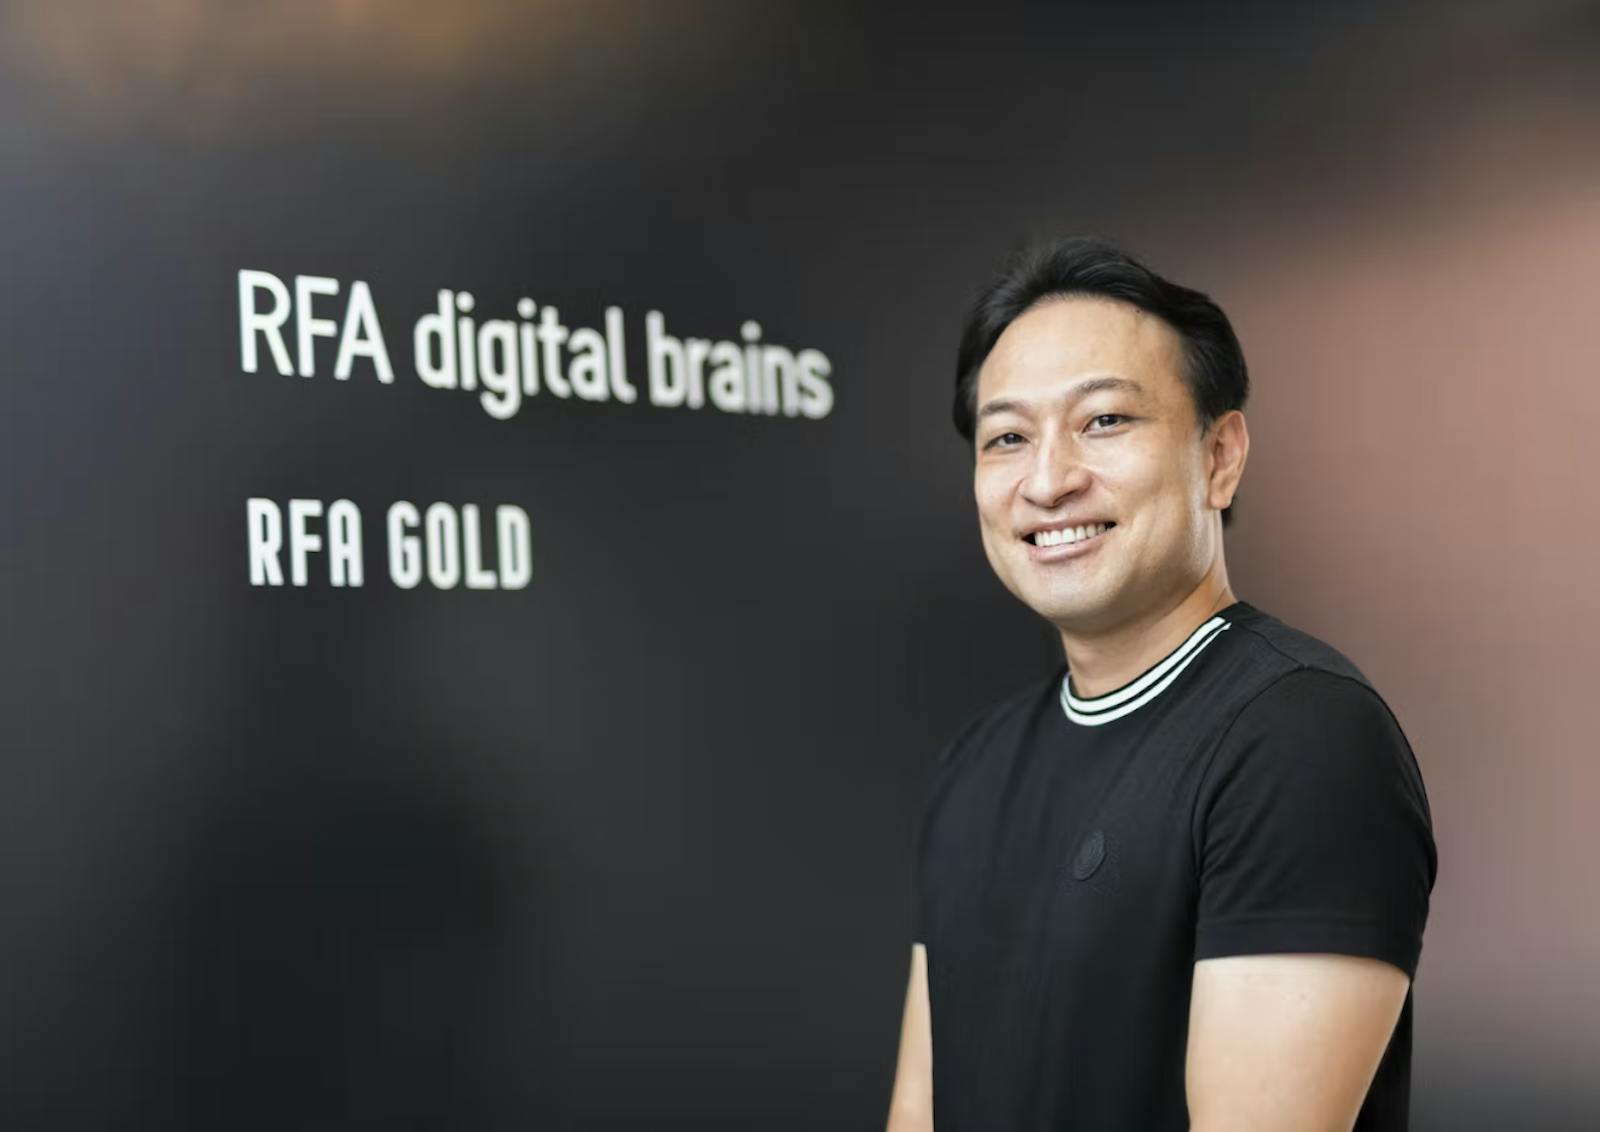 RFA digital brains株式会社